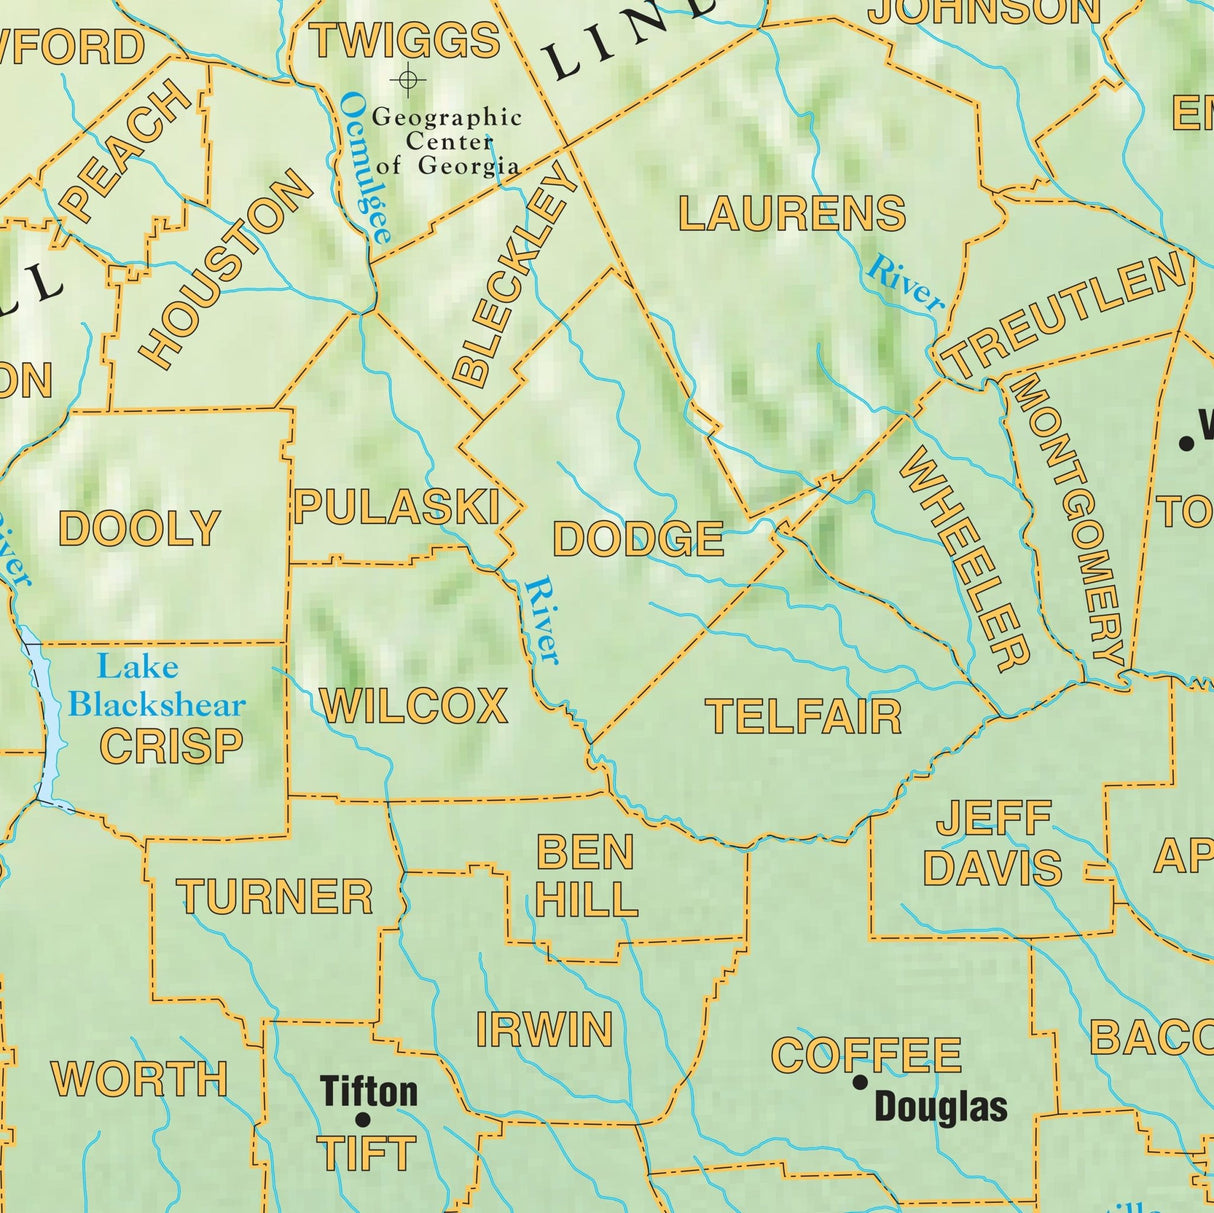 Georgia Shaded Relief State Wall Map - KA-S-GA-SHR-29X38-PAPER - Ultimate Globes